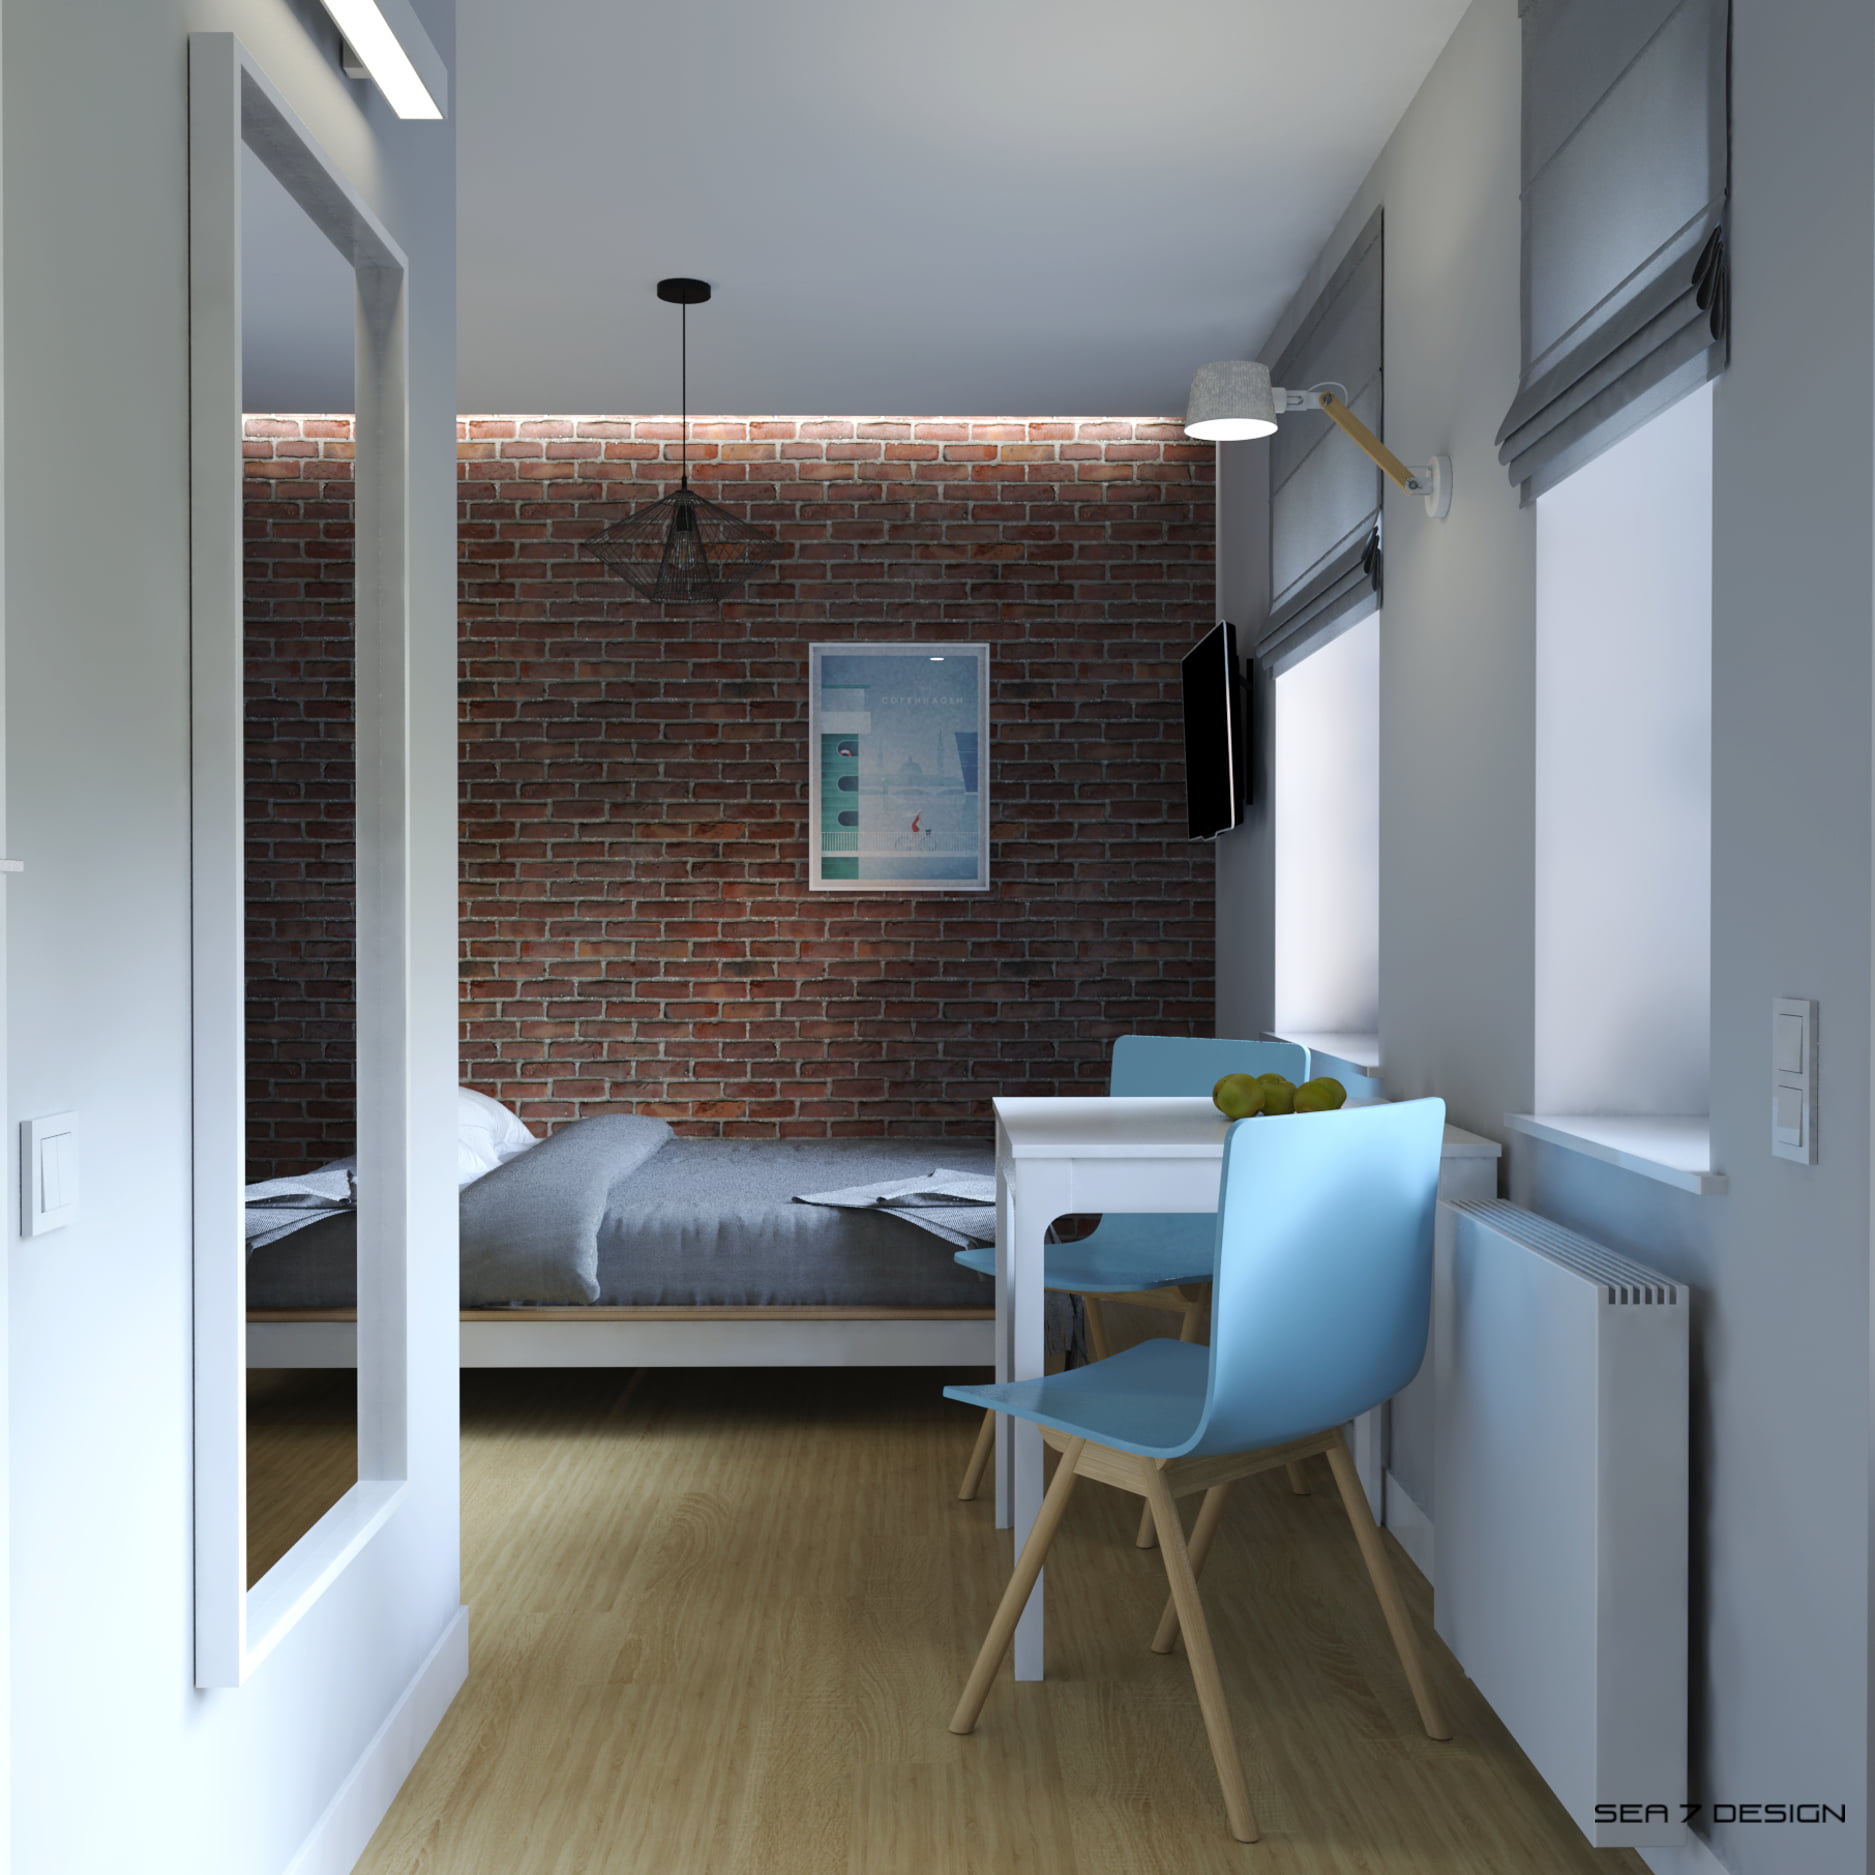 Sopot apartment for rent blue mist bedroom